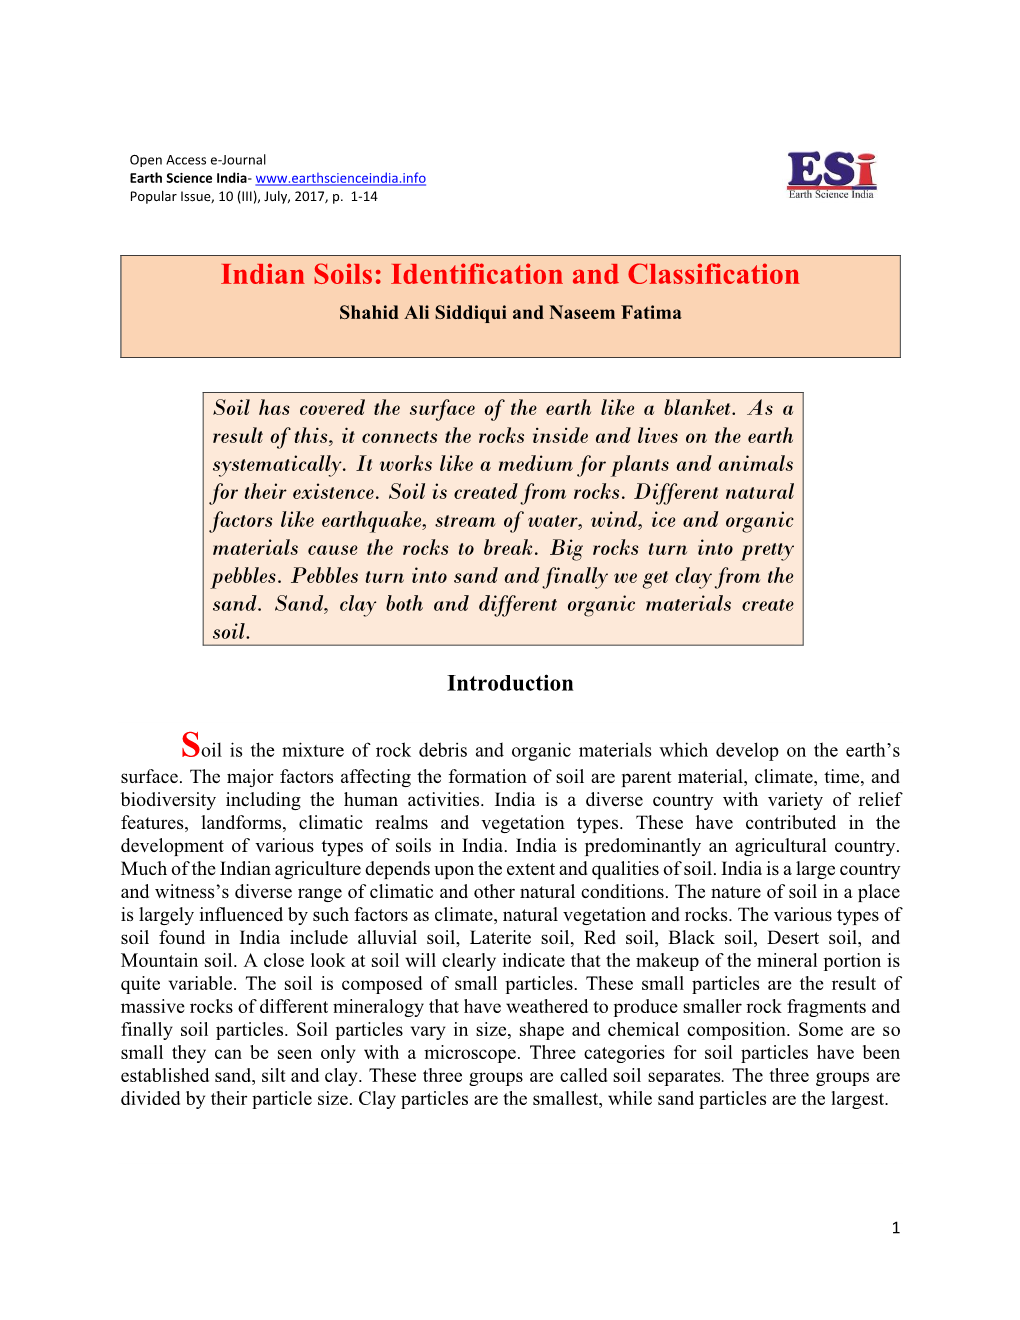 Indian Soils: Identification and Classification Shahid Ali Siddiqui and Naseem Fatima